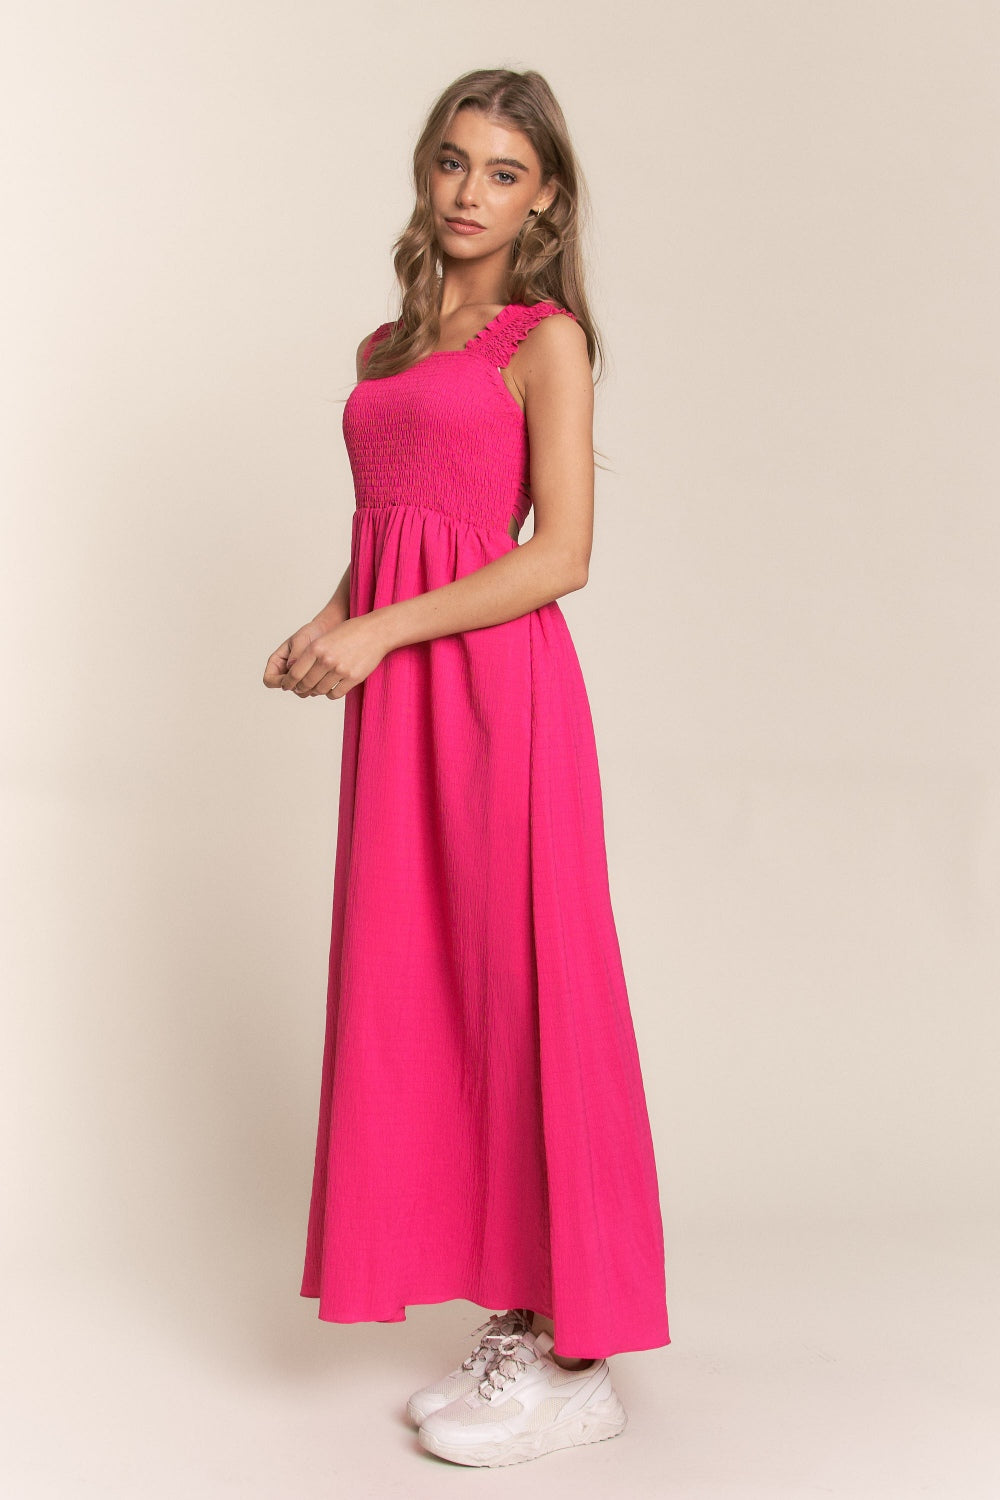 KESLEY Casual Dress Hot Pink Texture Criss Cross Back Tie Smocked Maxi Dress New Women's Fashion